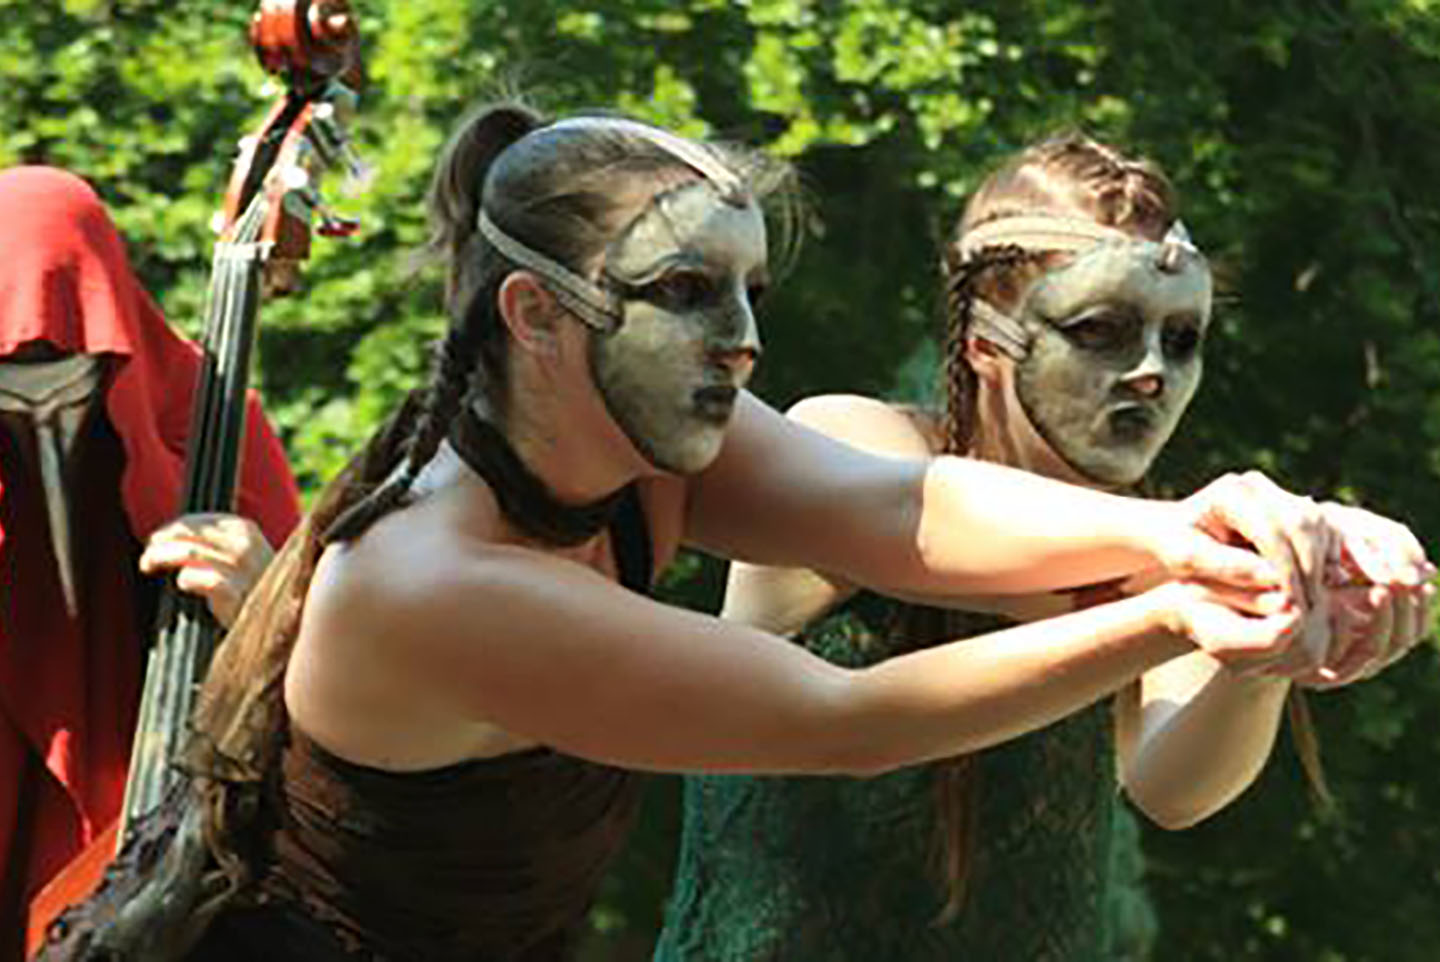 Image of 2 MorrisonDancers dancing with masks in a garden